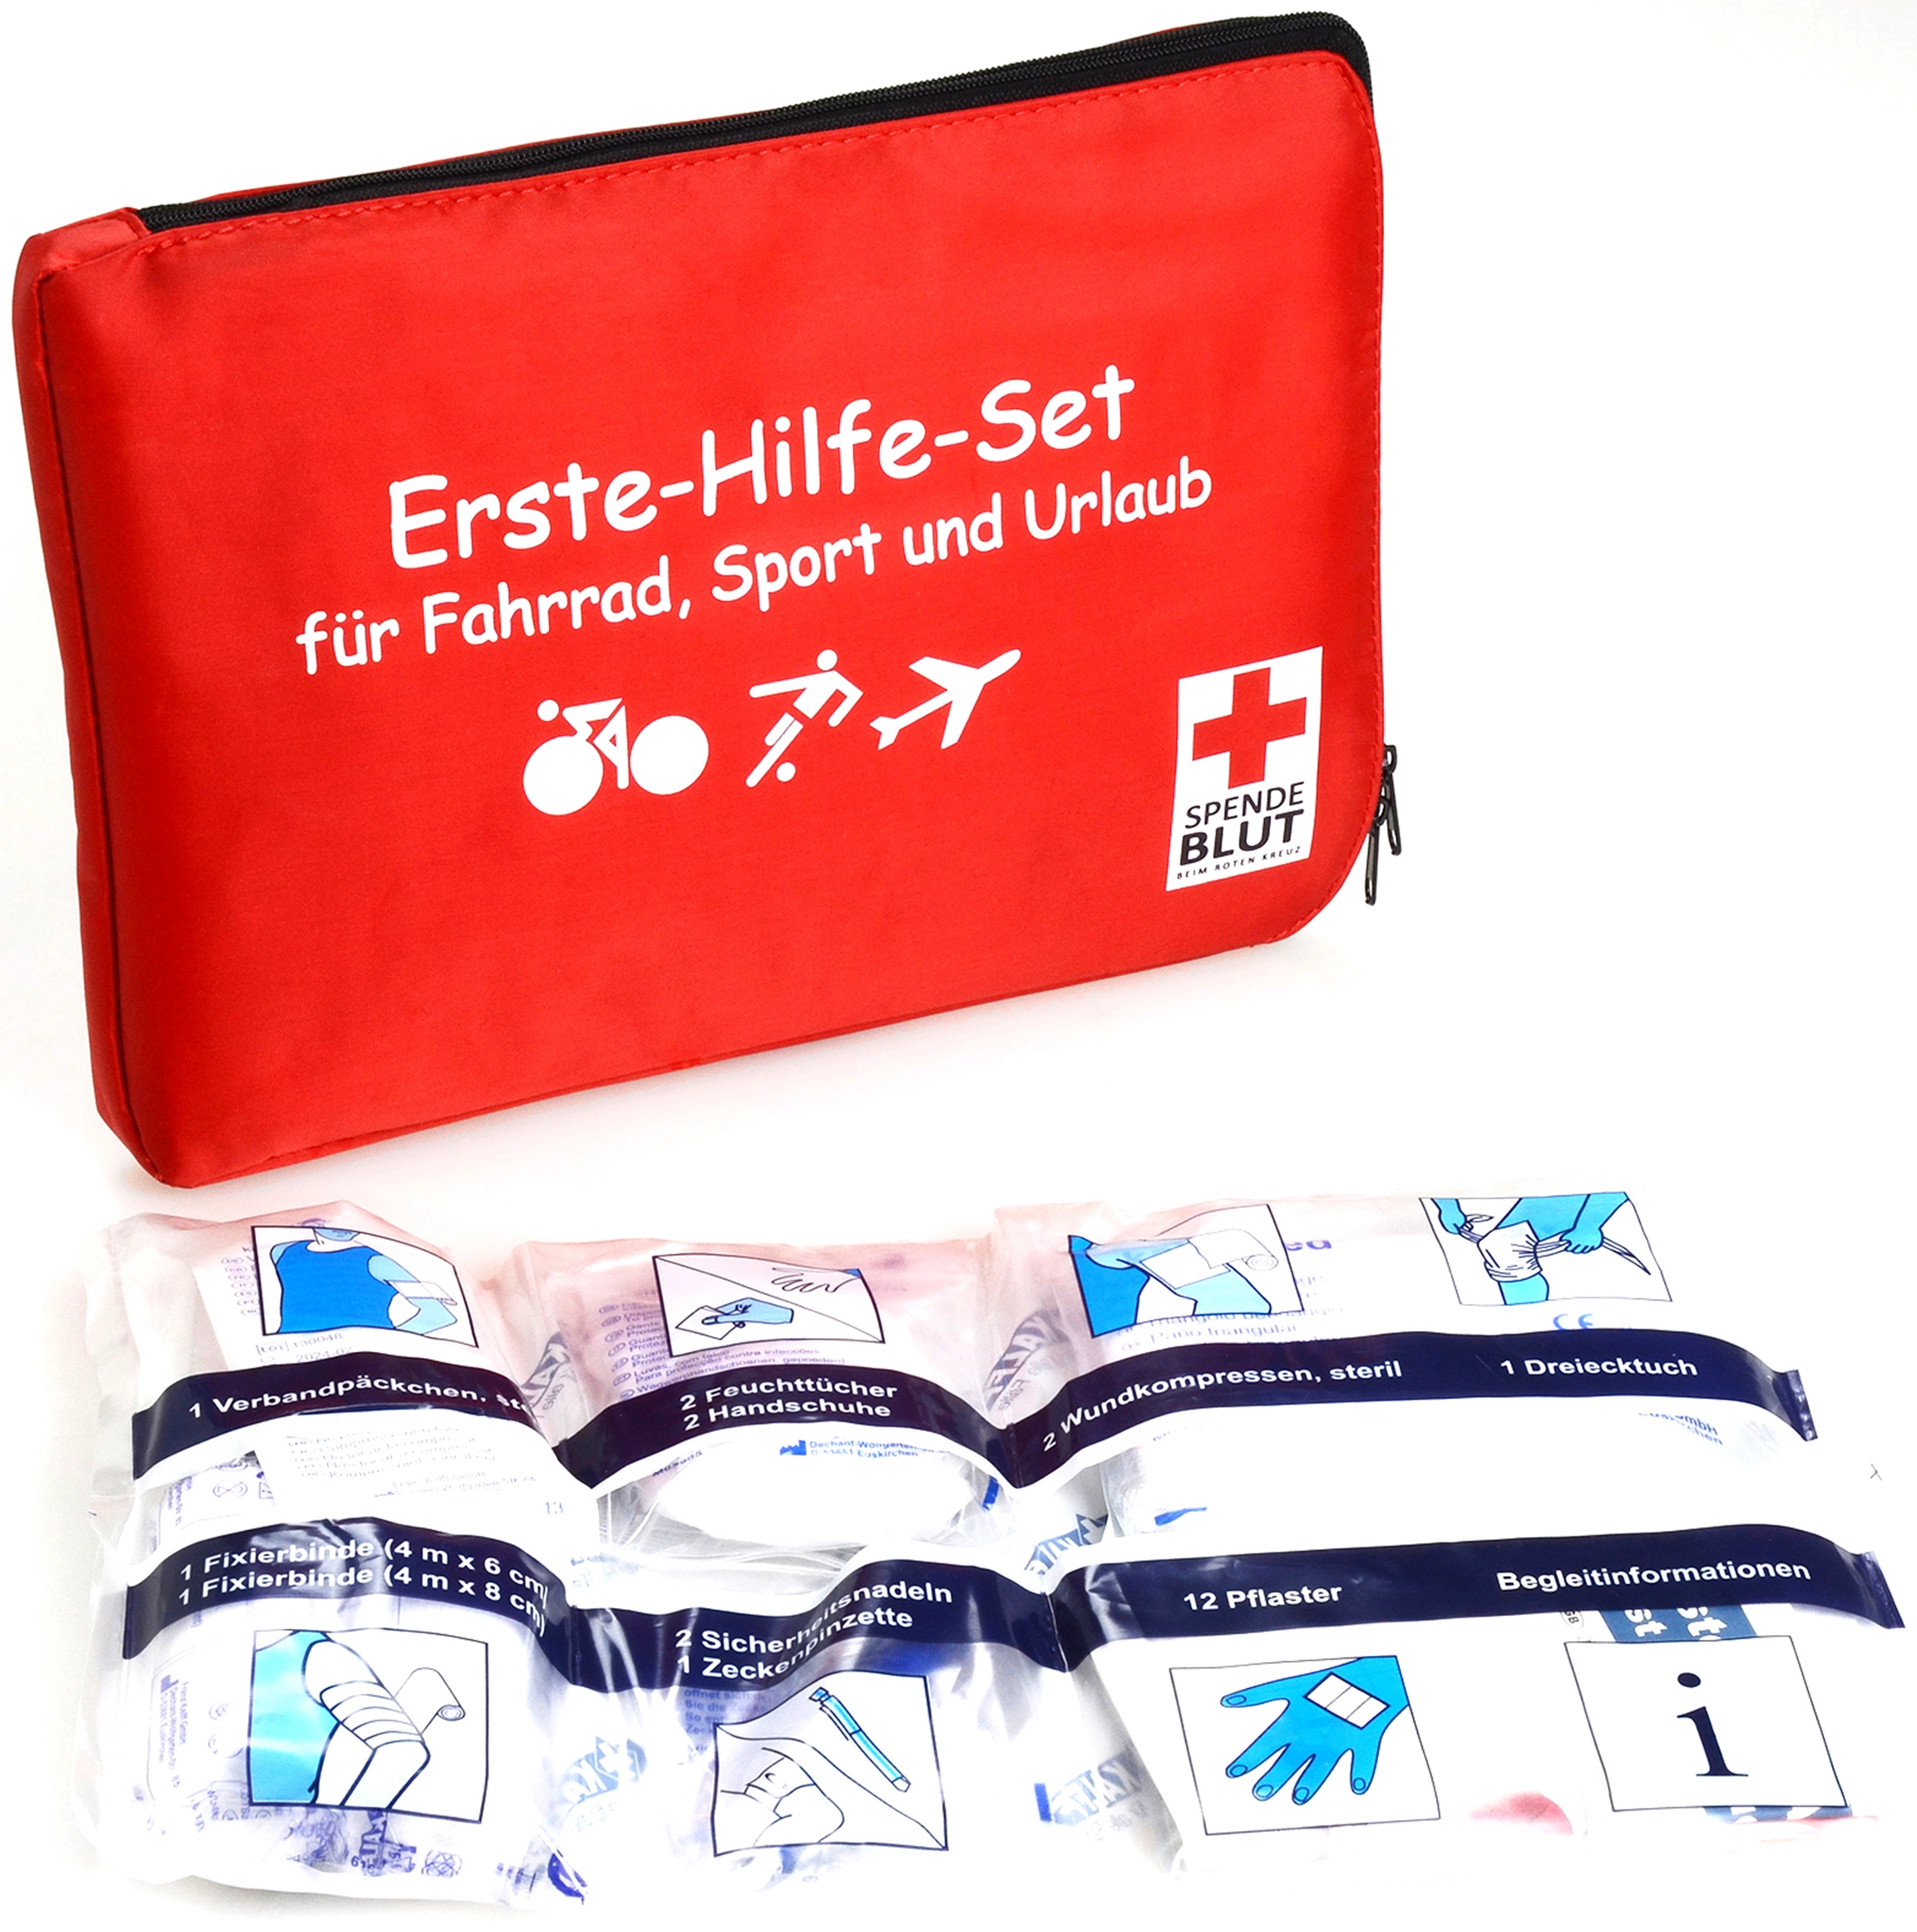 Kalff Erste Hilfe Tasche Universal inkl. Erste-Hilfe-Material